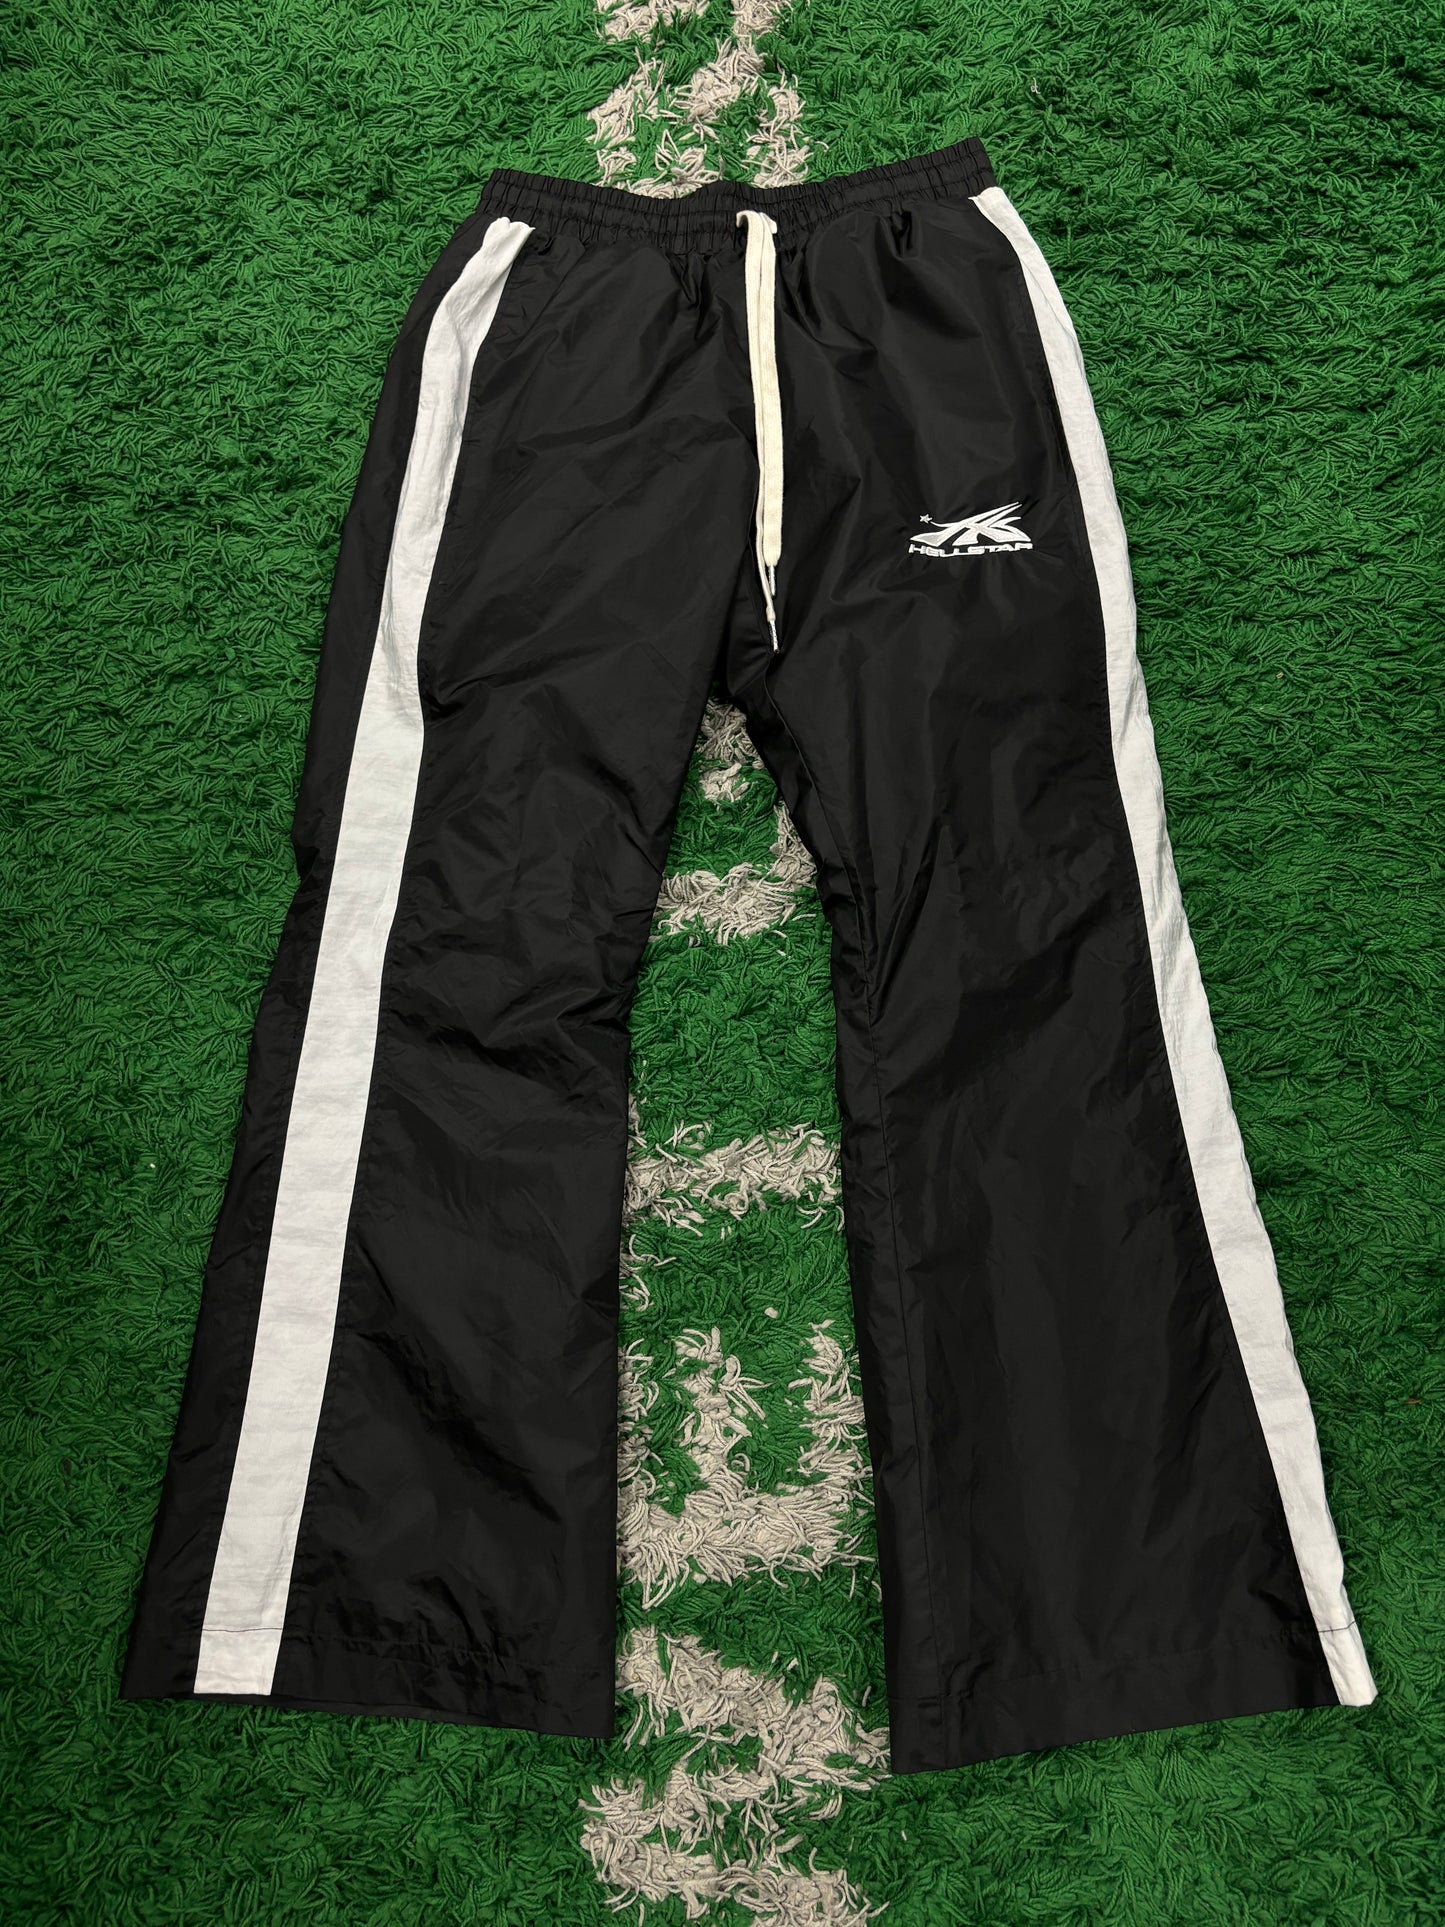 Hellstar Track Pants Black size:Large Used